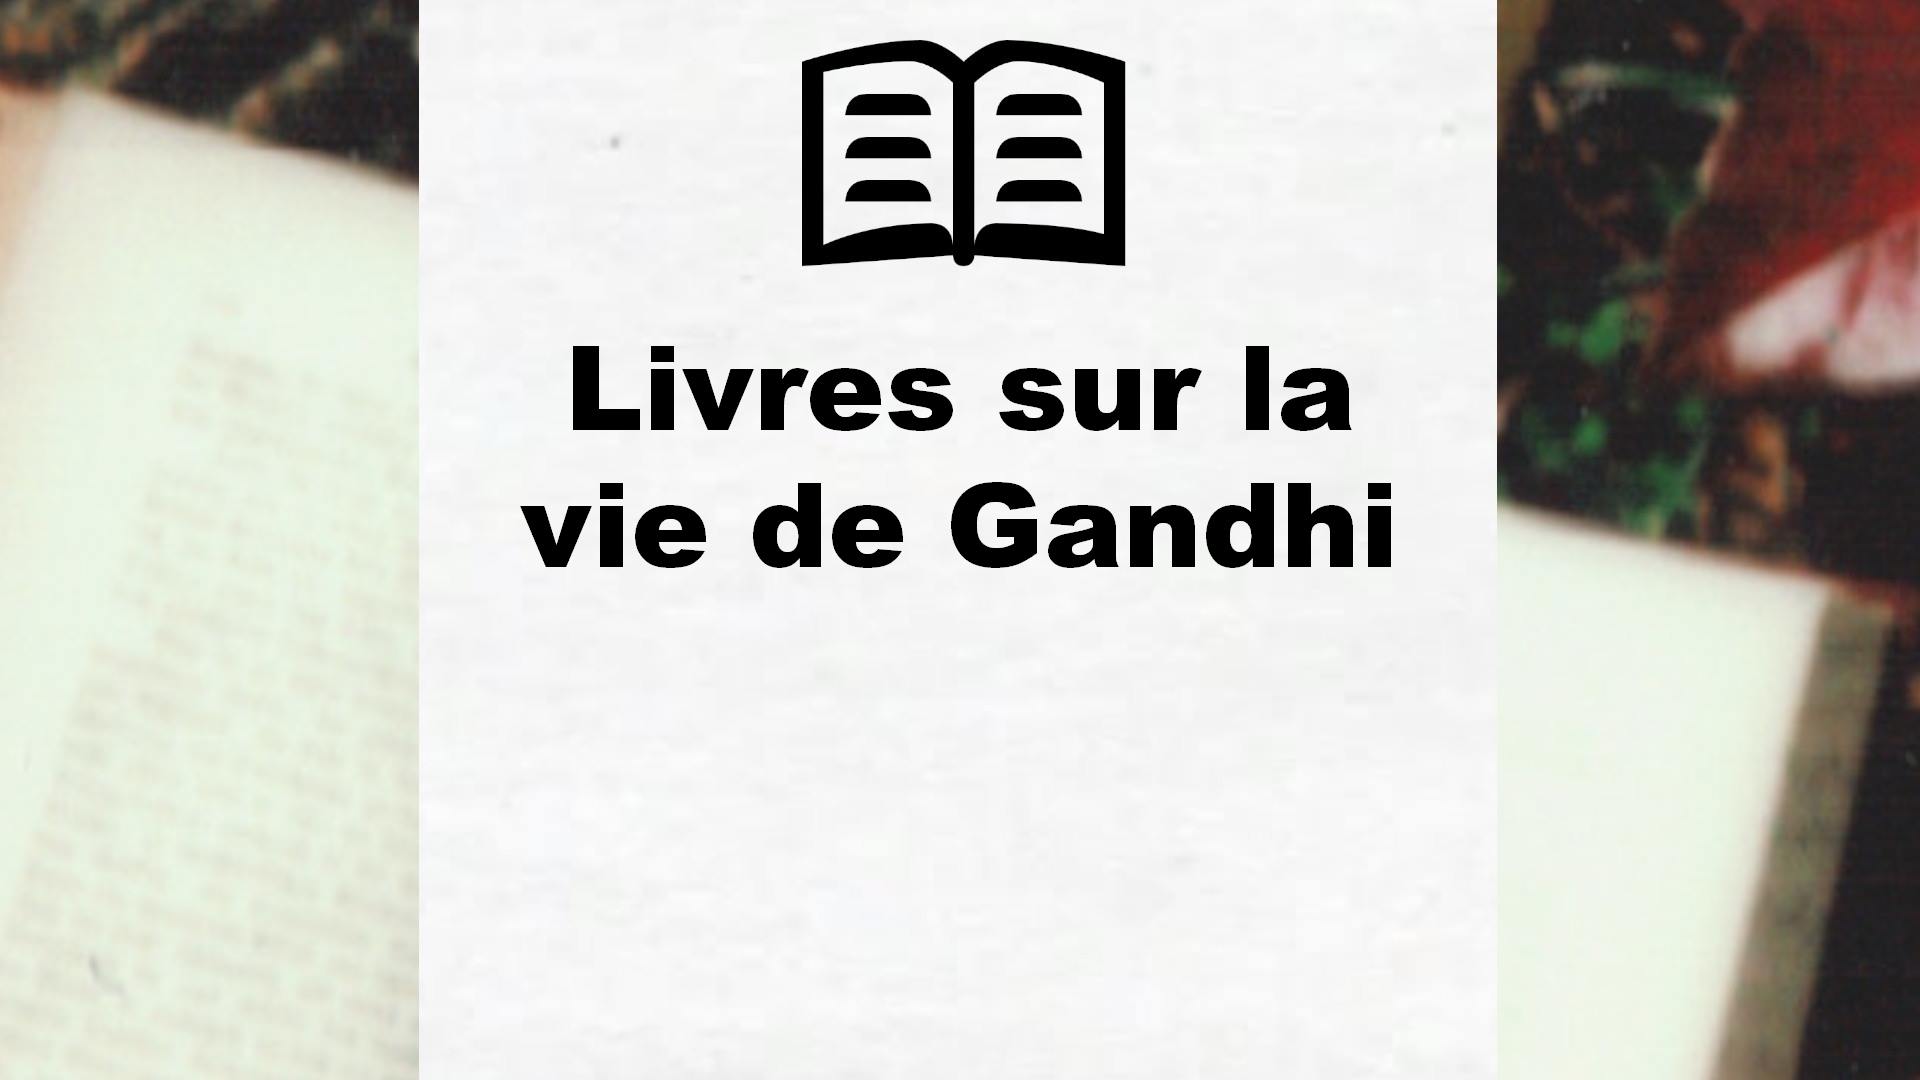 Livres sur la vie de Gandhi